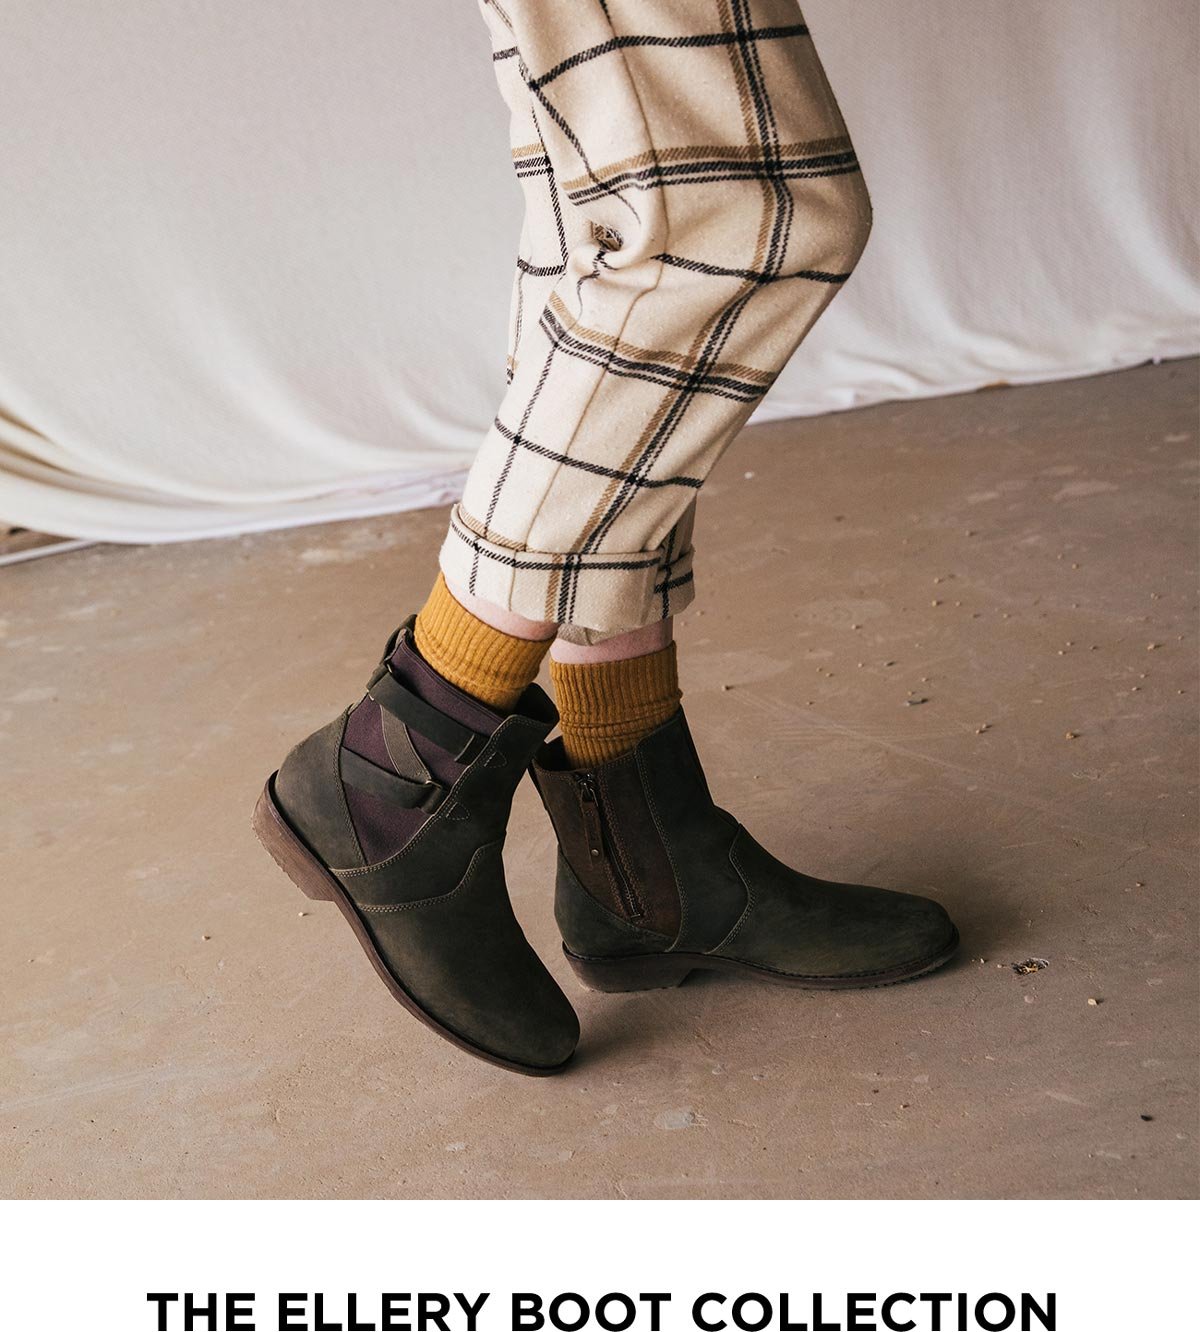 jp.teva.com: Stylish leather boots | Milled